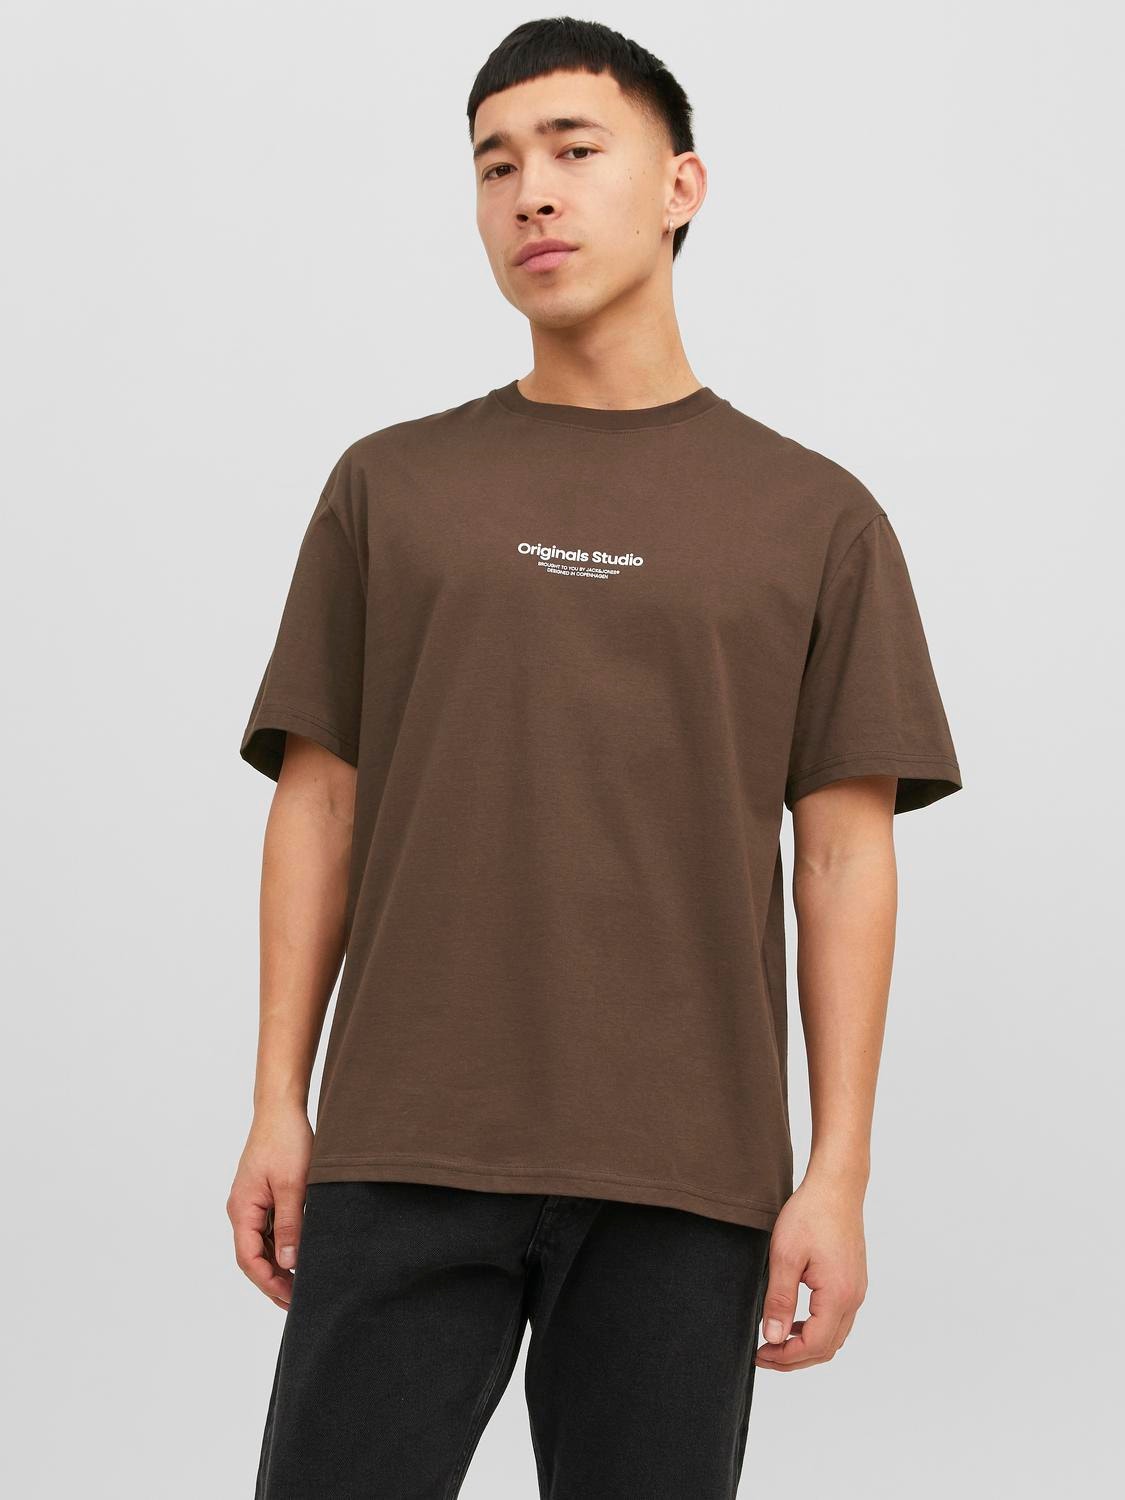 Jack & Jones T-shirt Imprimé Col rond -Chocolate Brown - 12240121